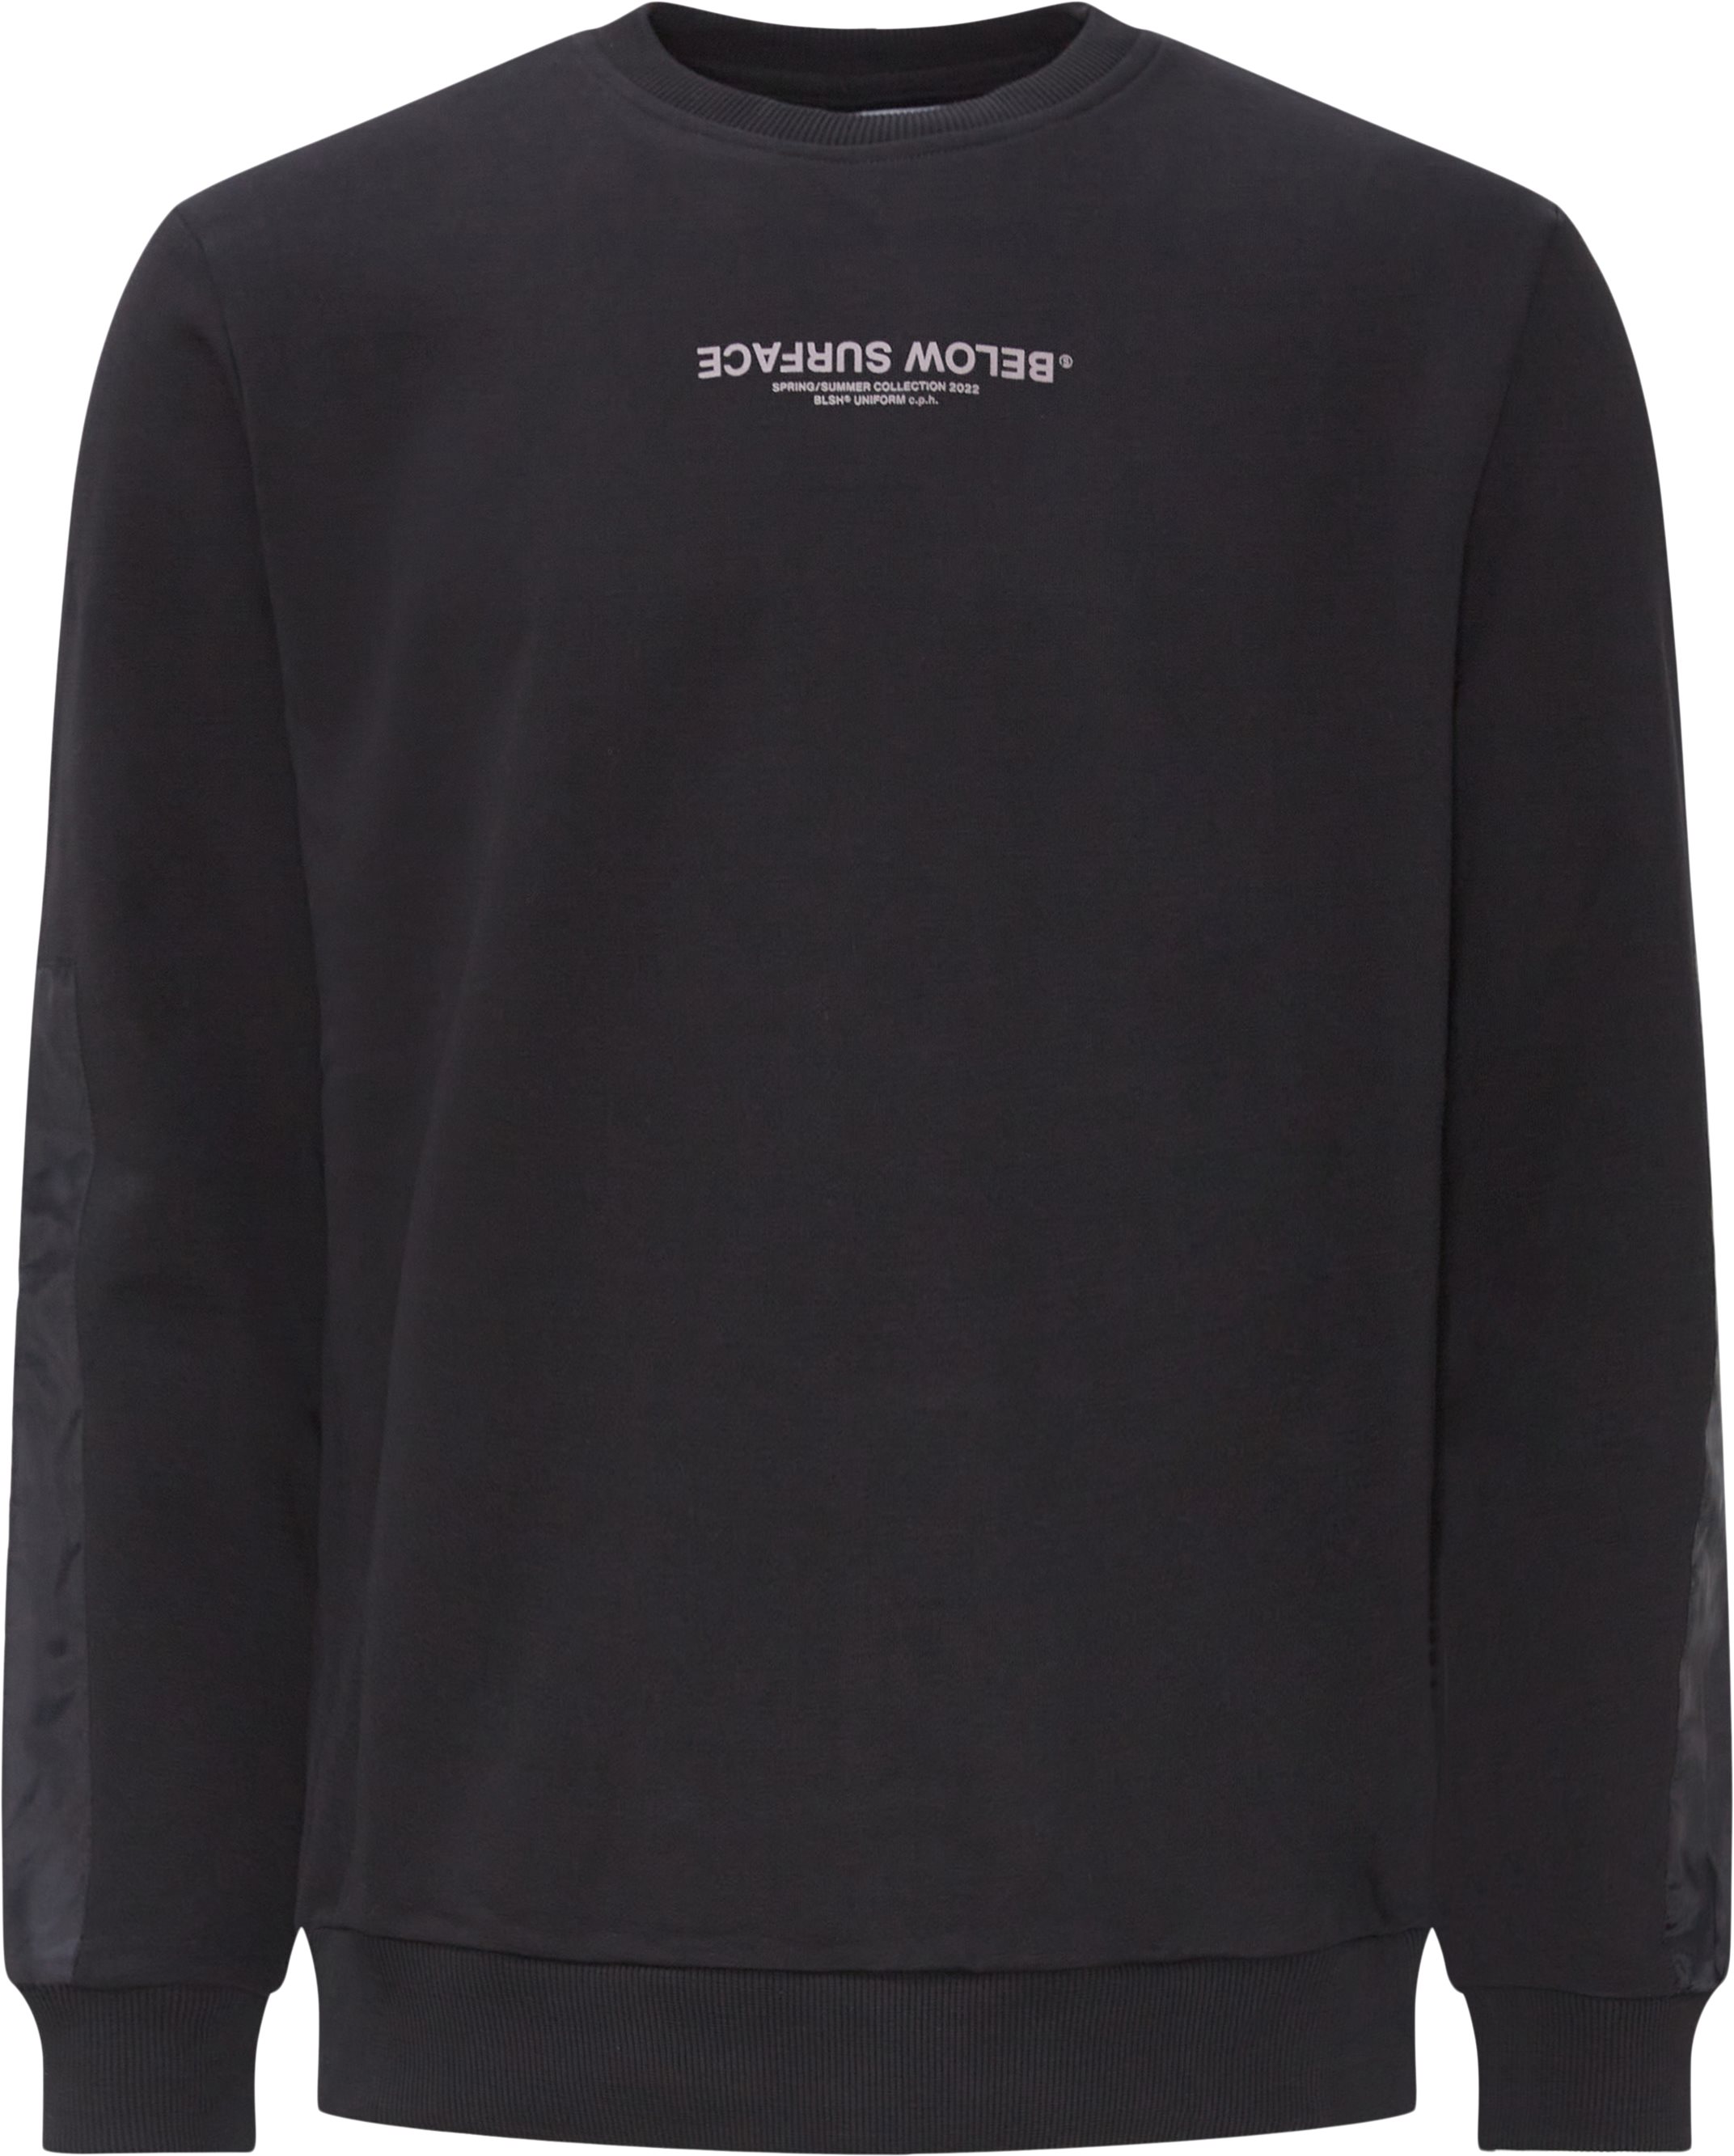 BLS Sweatshirts BELOW SURFACE CREWNECK Black